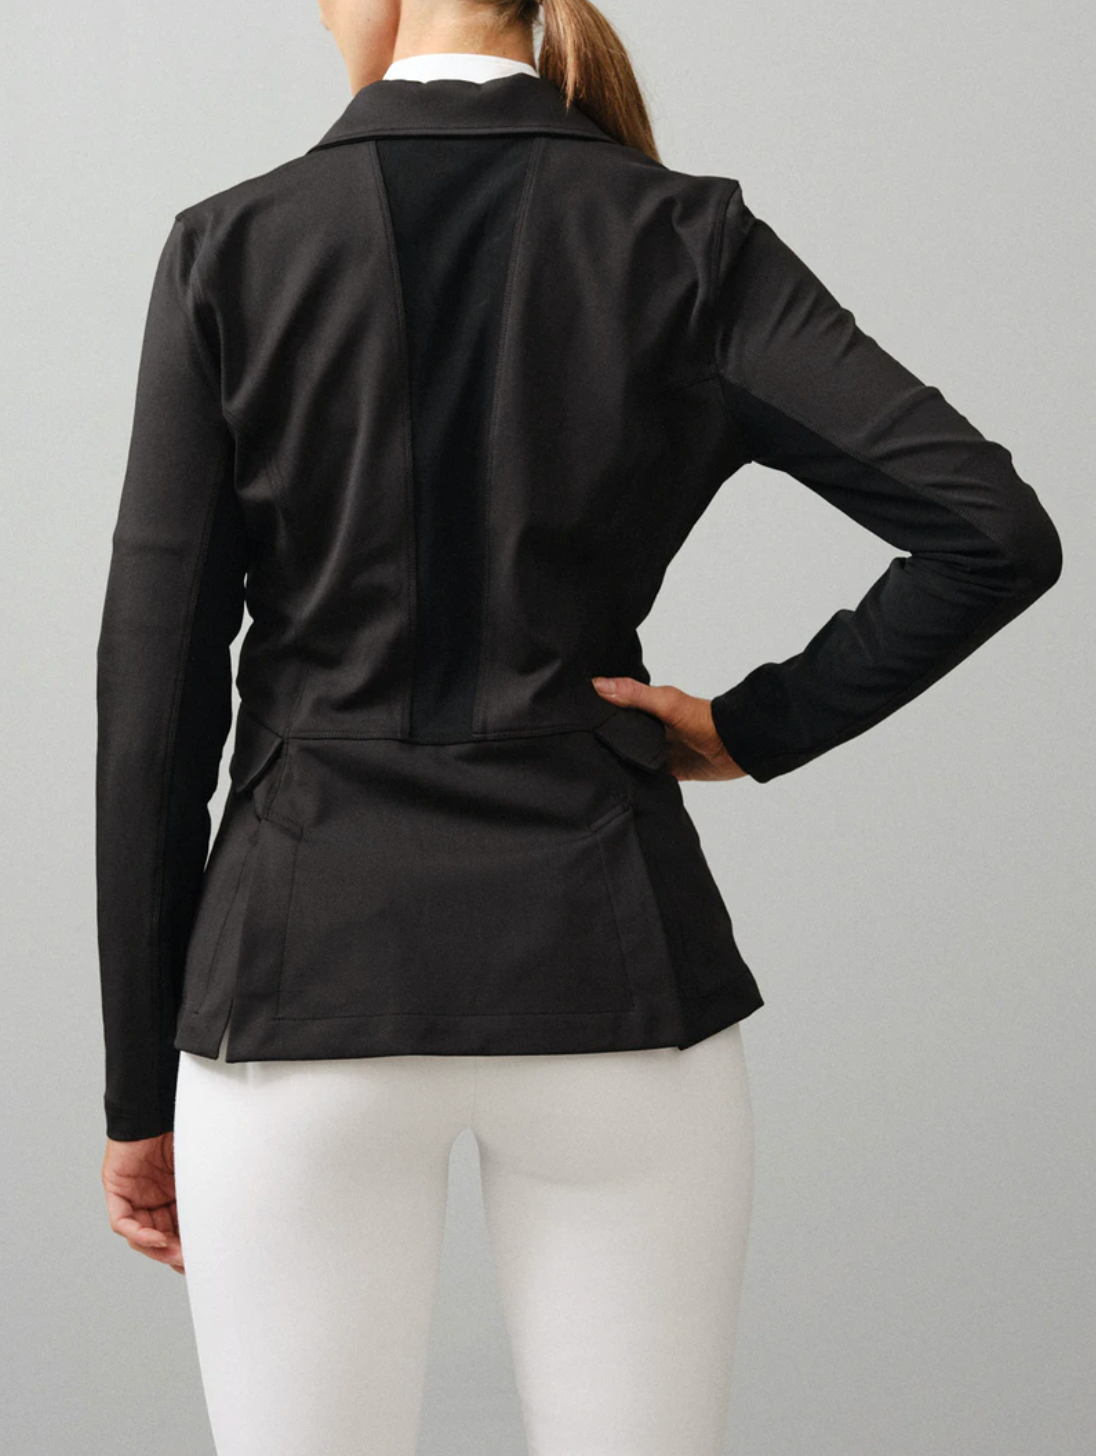 PSOS- Lycra Competition Jacket Black